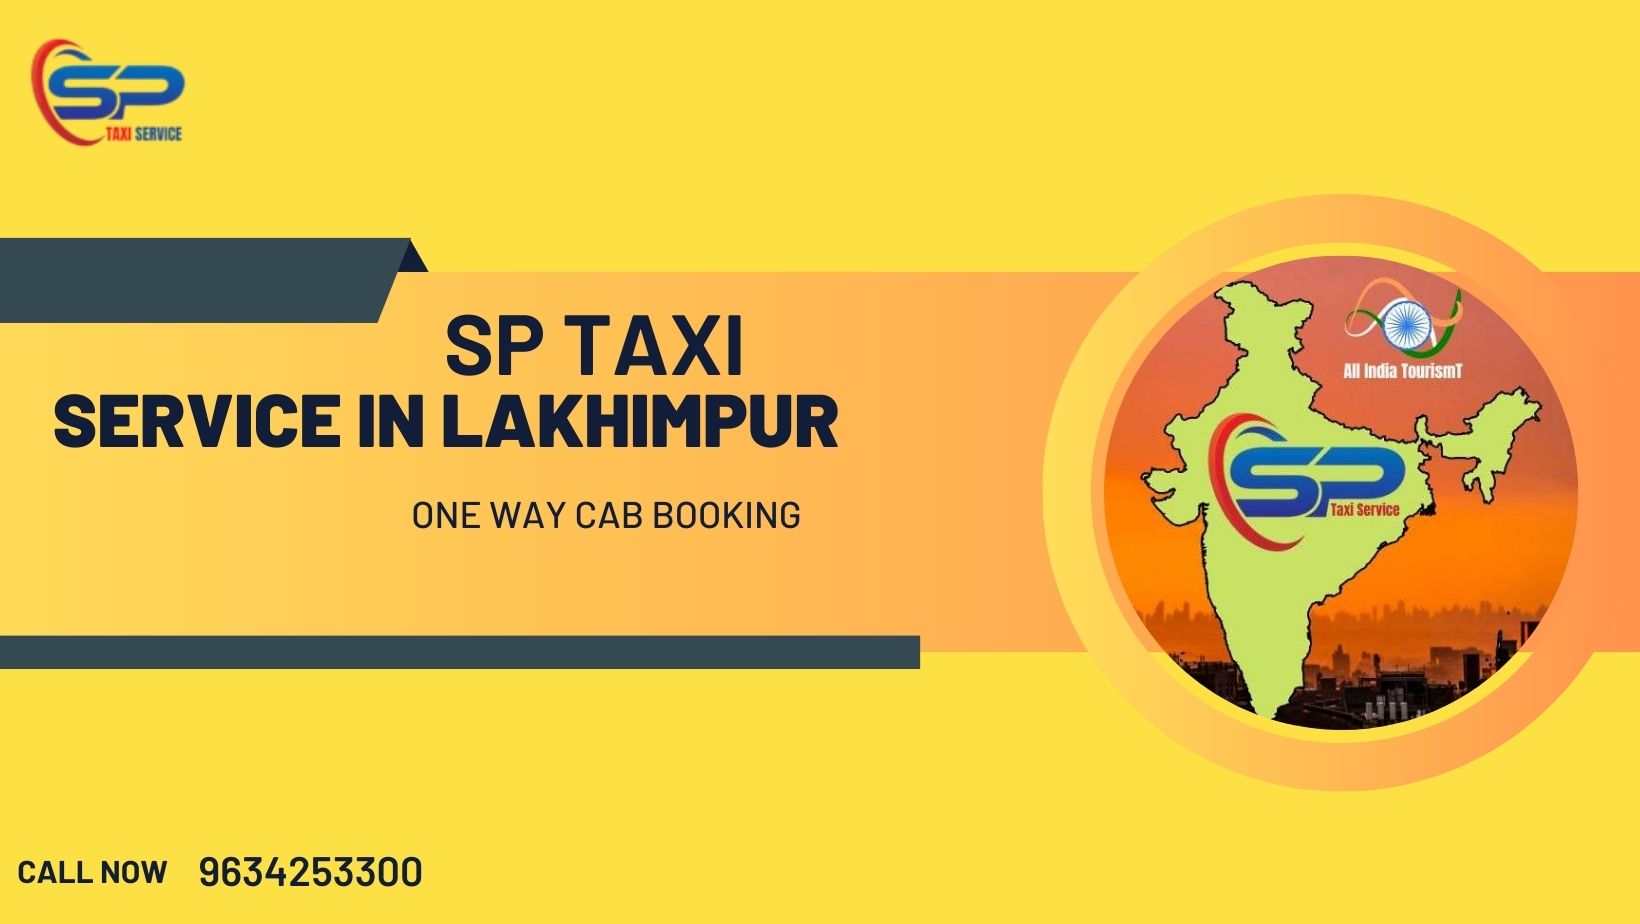 Lakhimpur Taxi service